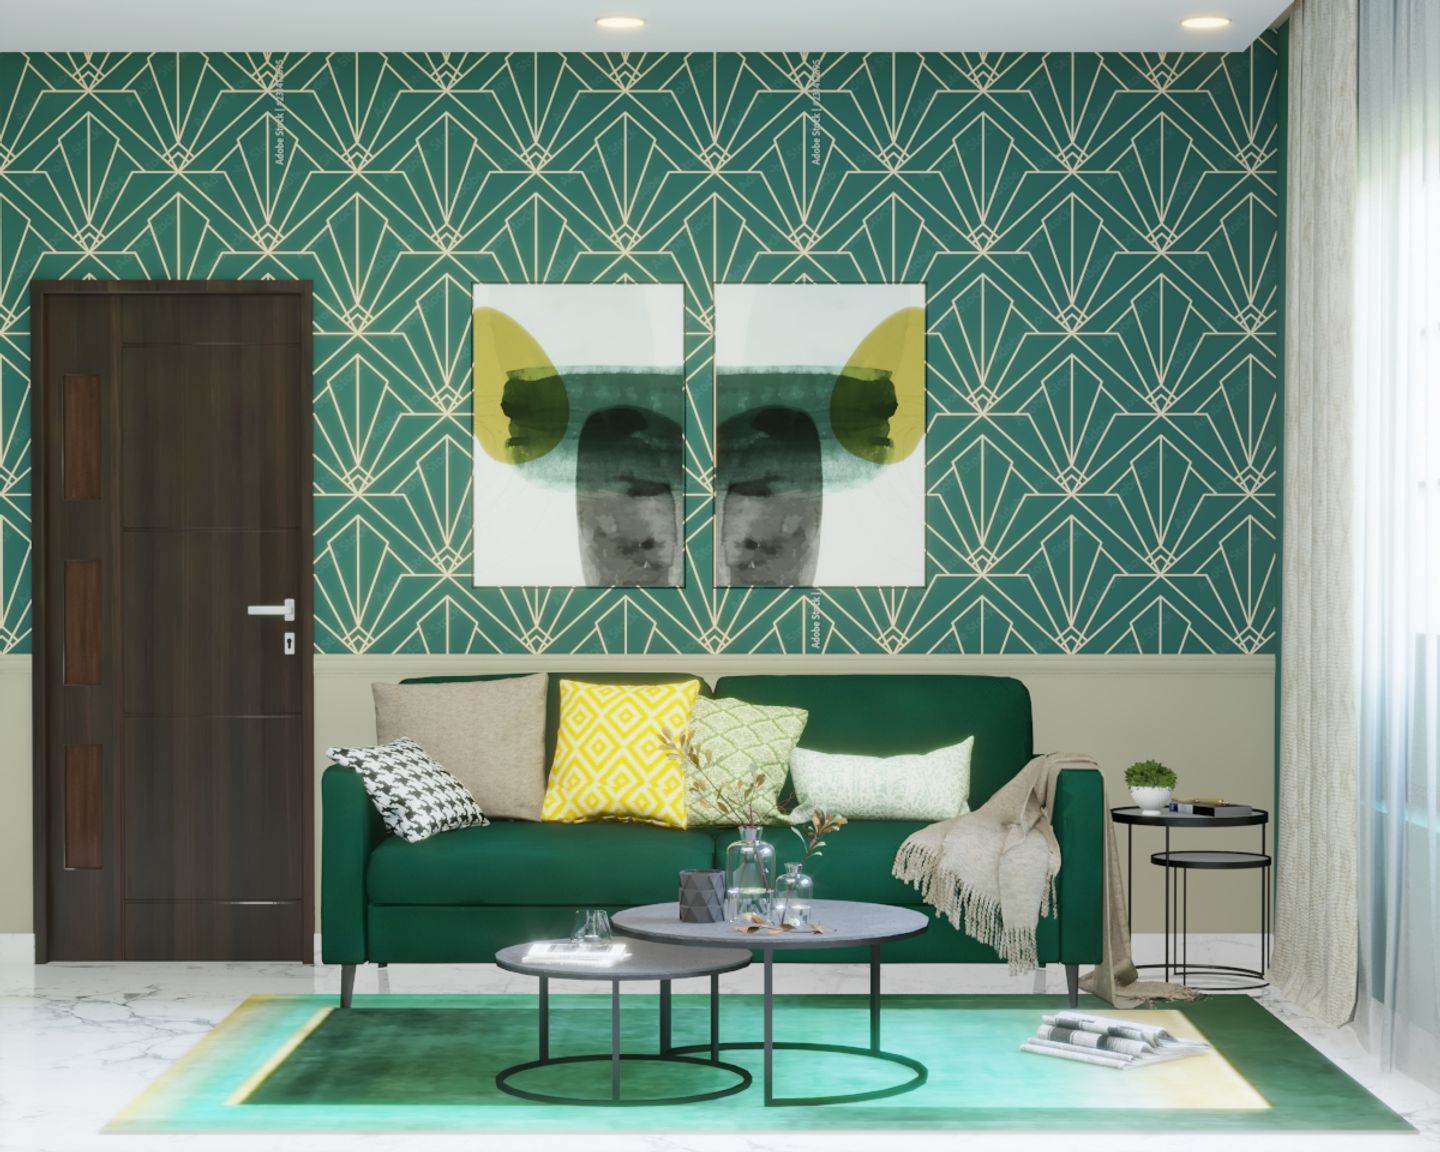 Modern Living Room Design With Green Geometric Wallpaper - Livspace